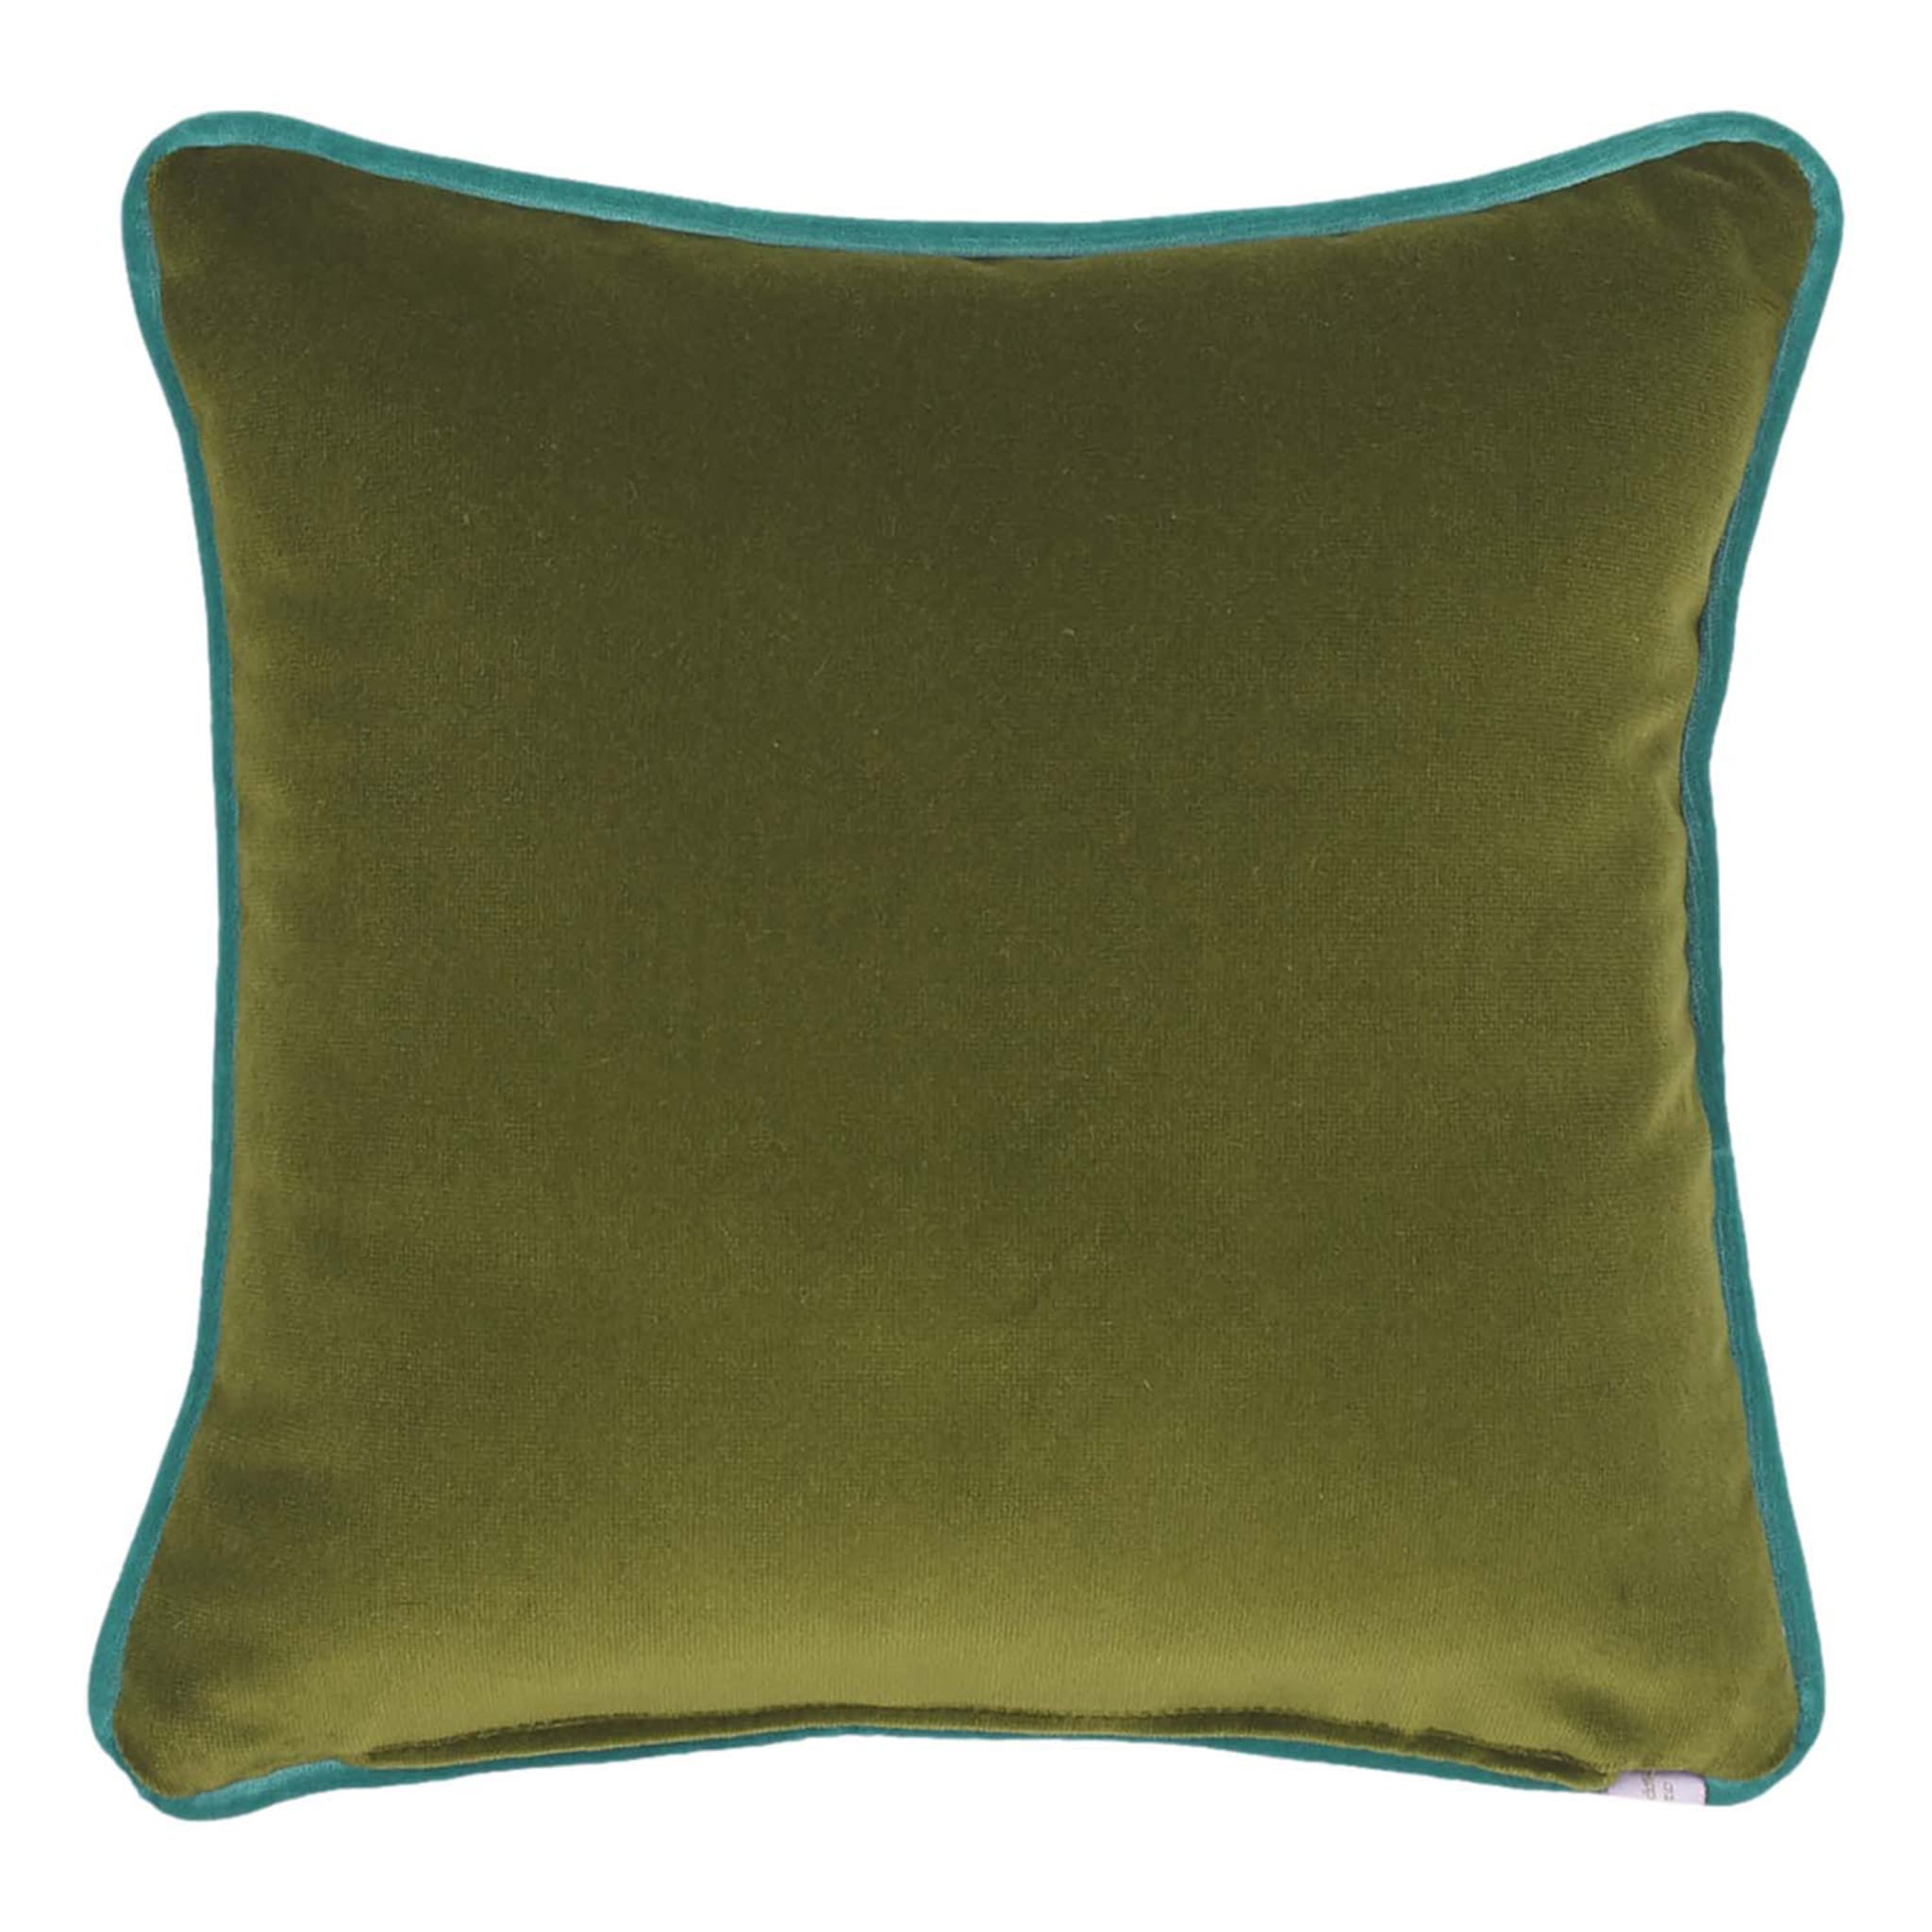 Green Light Blue Square Carrè Cushion - Alternative view 1